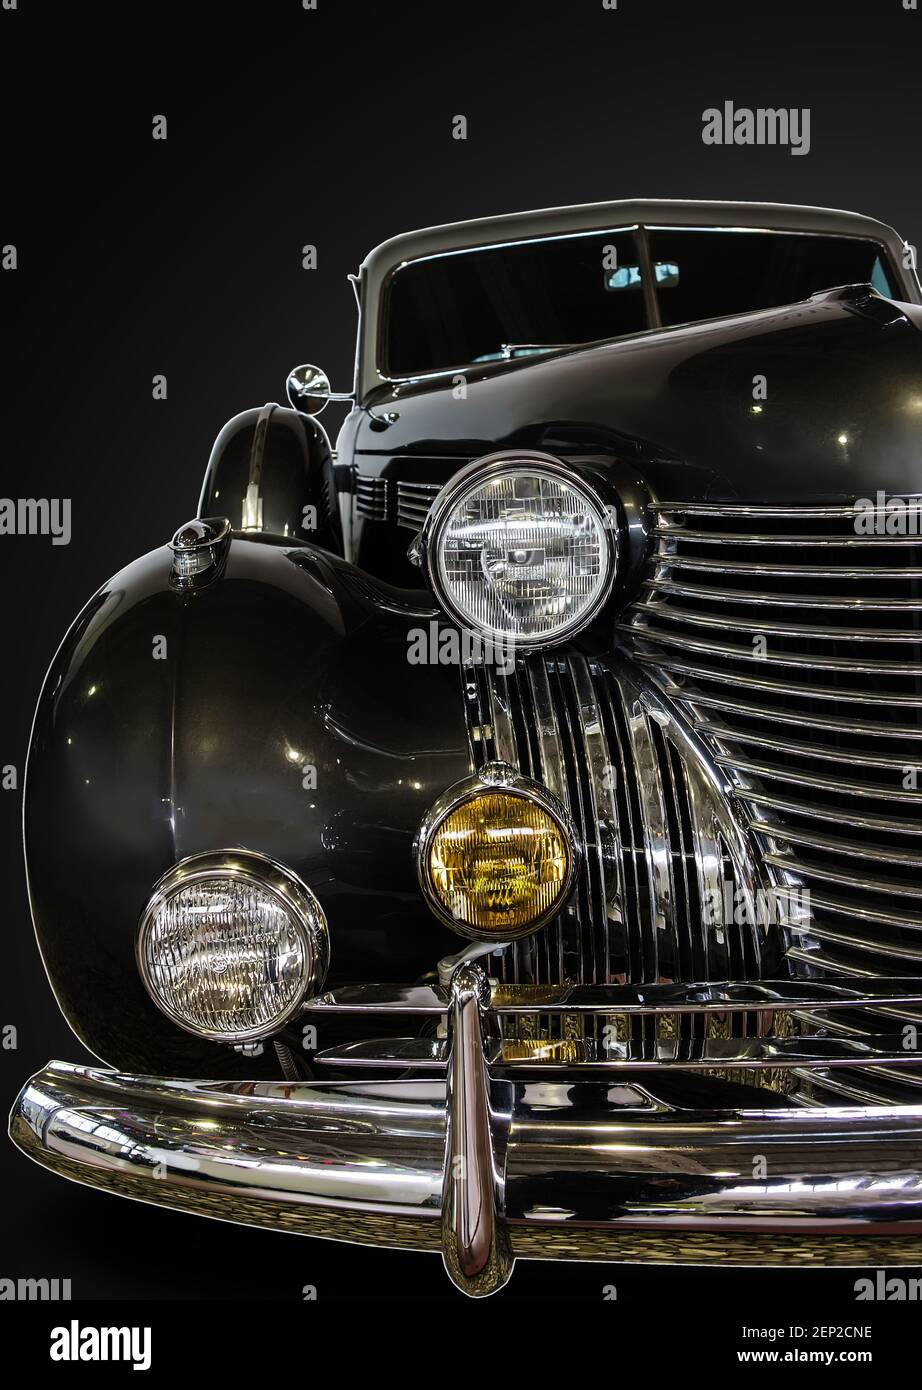 vintage car, close-up, dark background Stock Photo